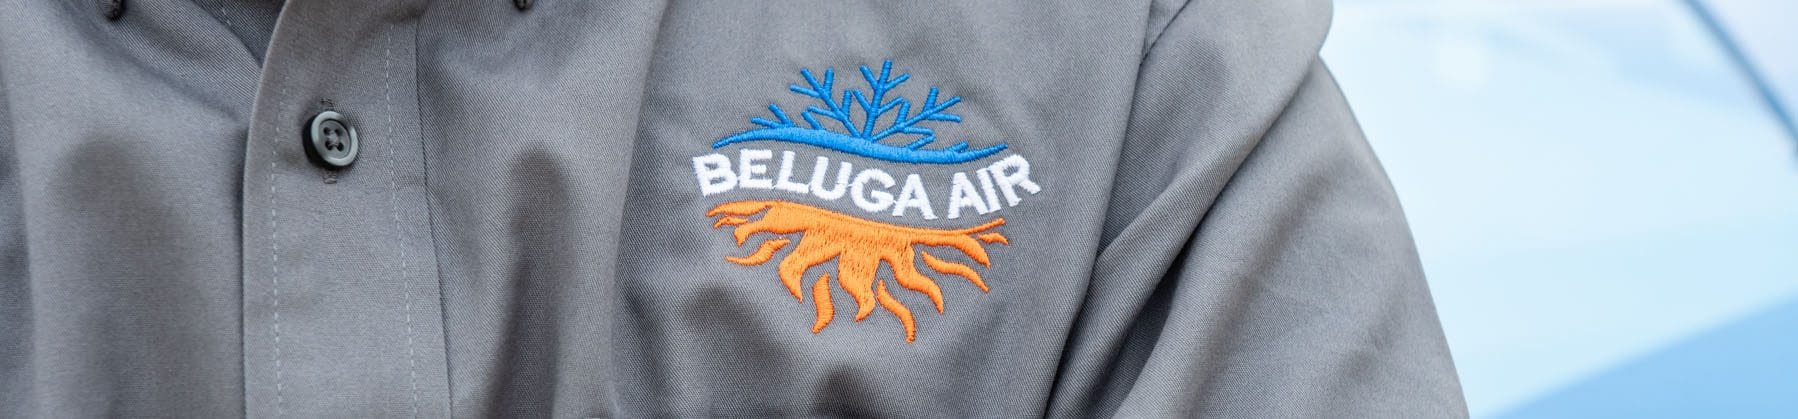 Beluga Air close up of uniform